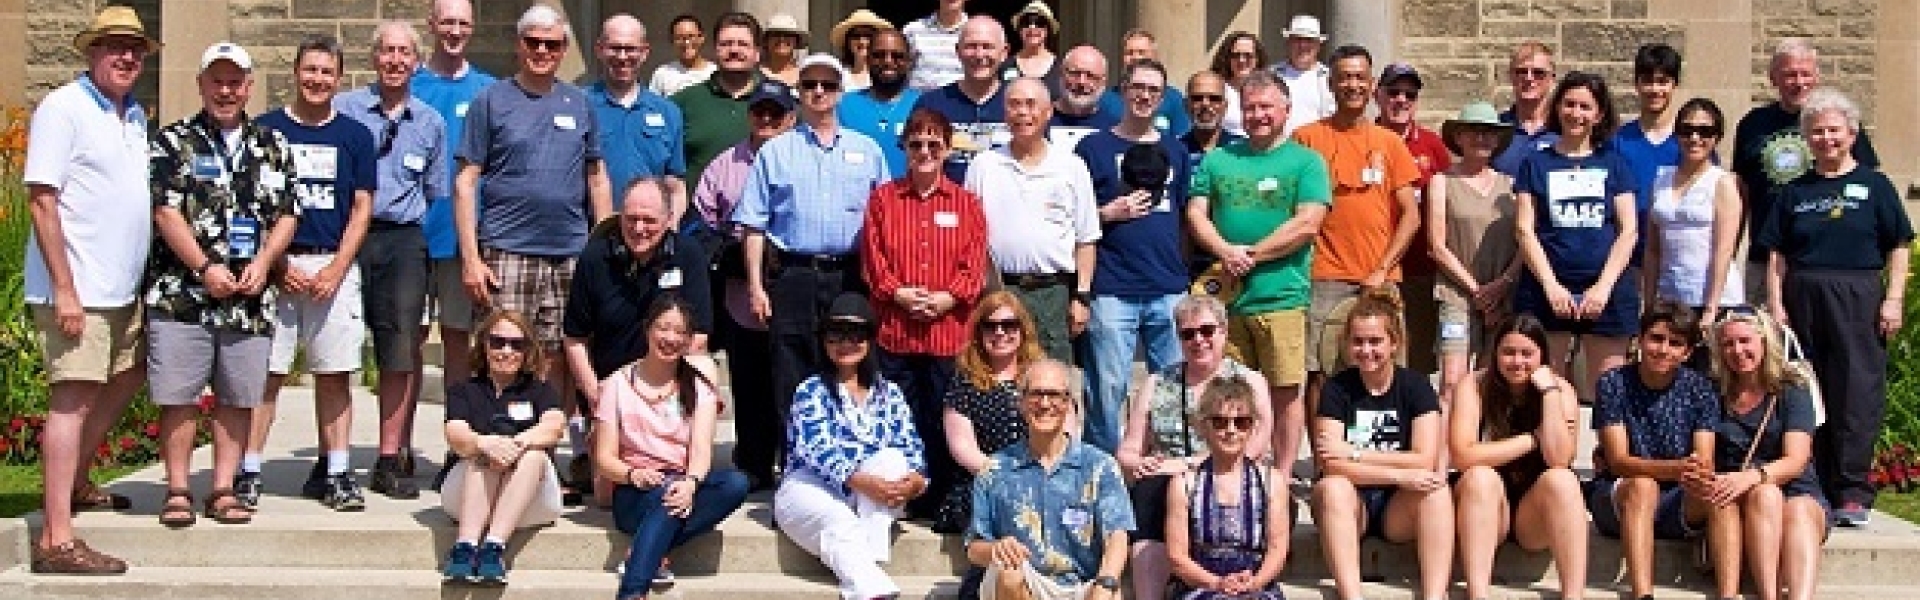 group shot awards picnic summer 2019 at the David Dunlap Observatory by Peter Visima